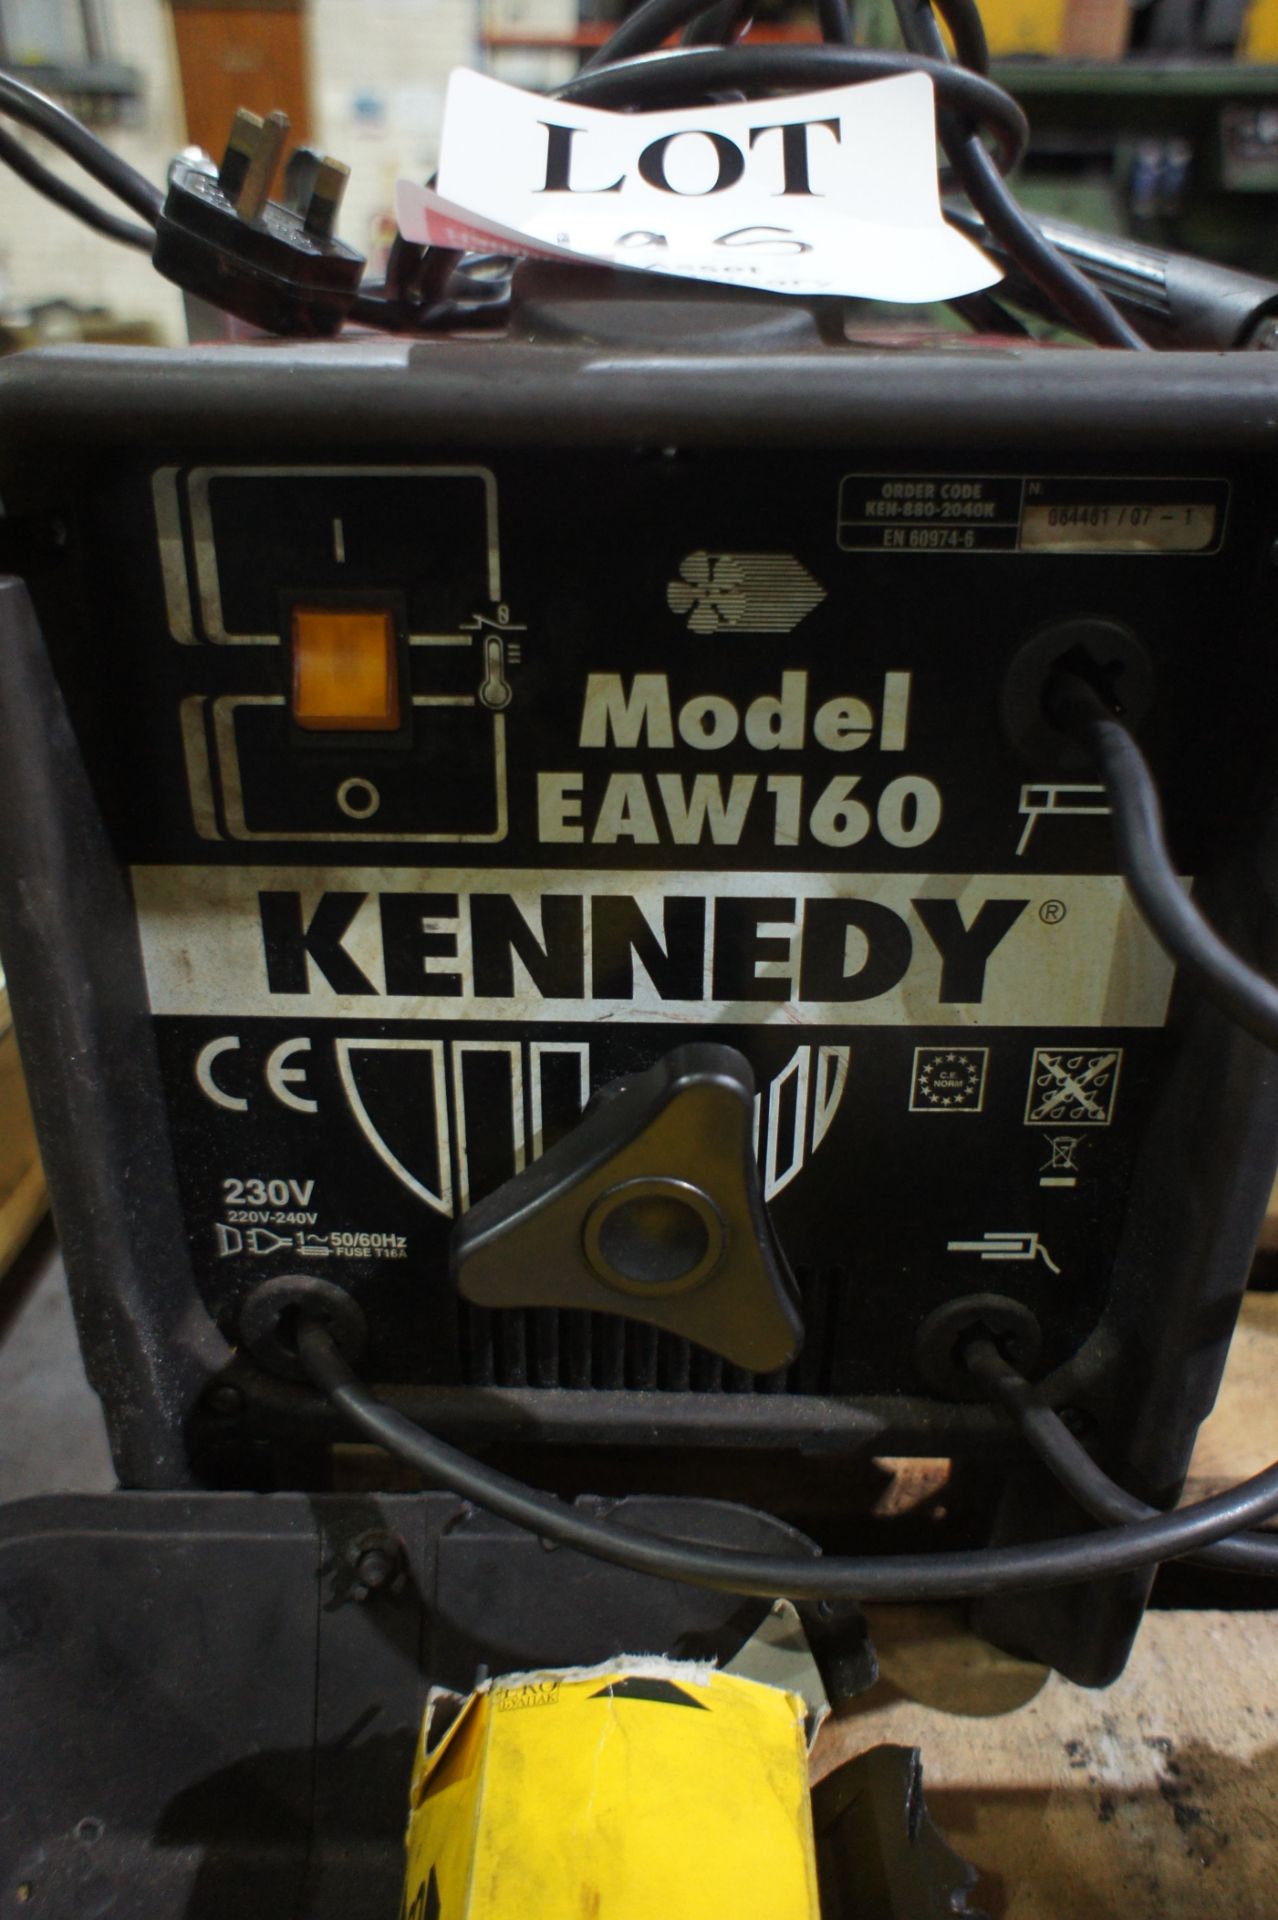 Kennedy EAW160 arc welder - Image 3 of 4